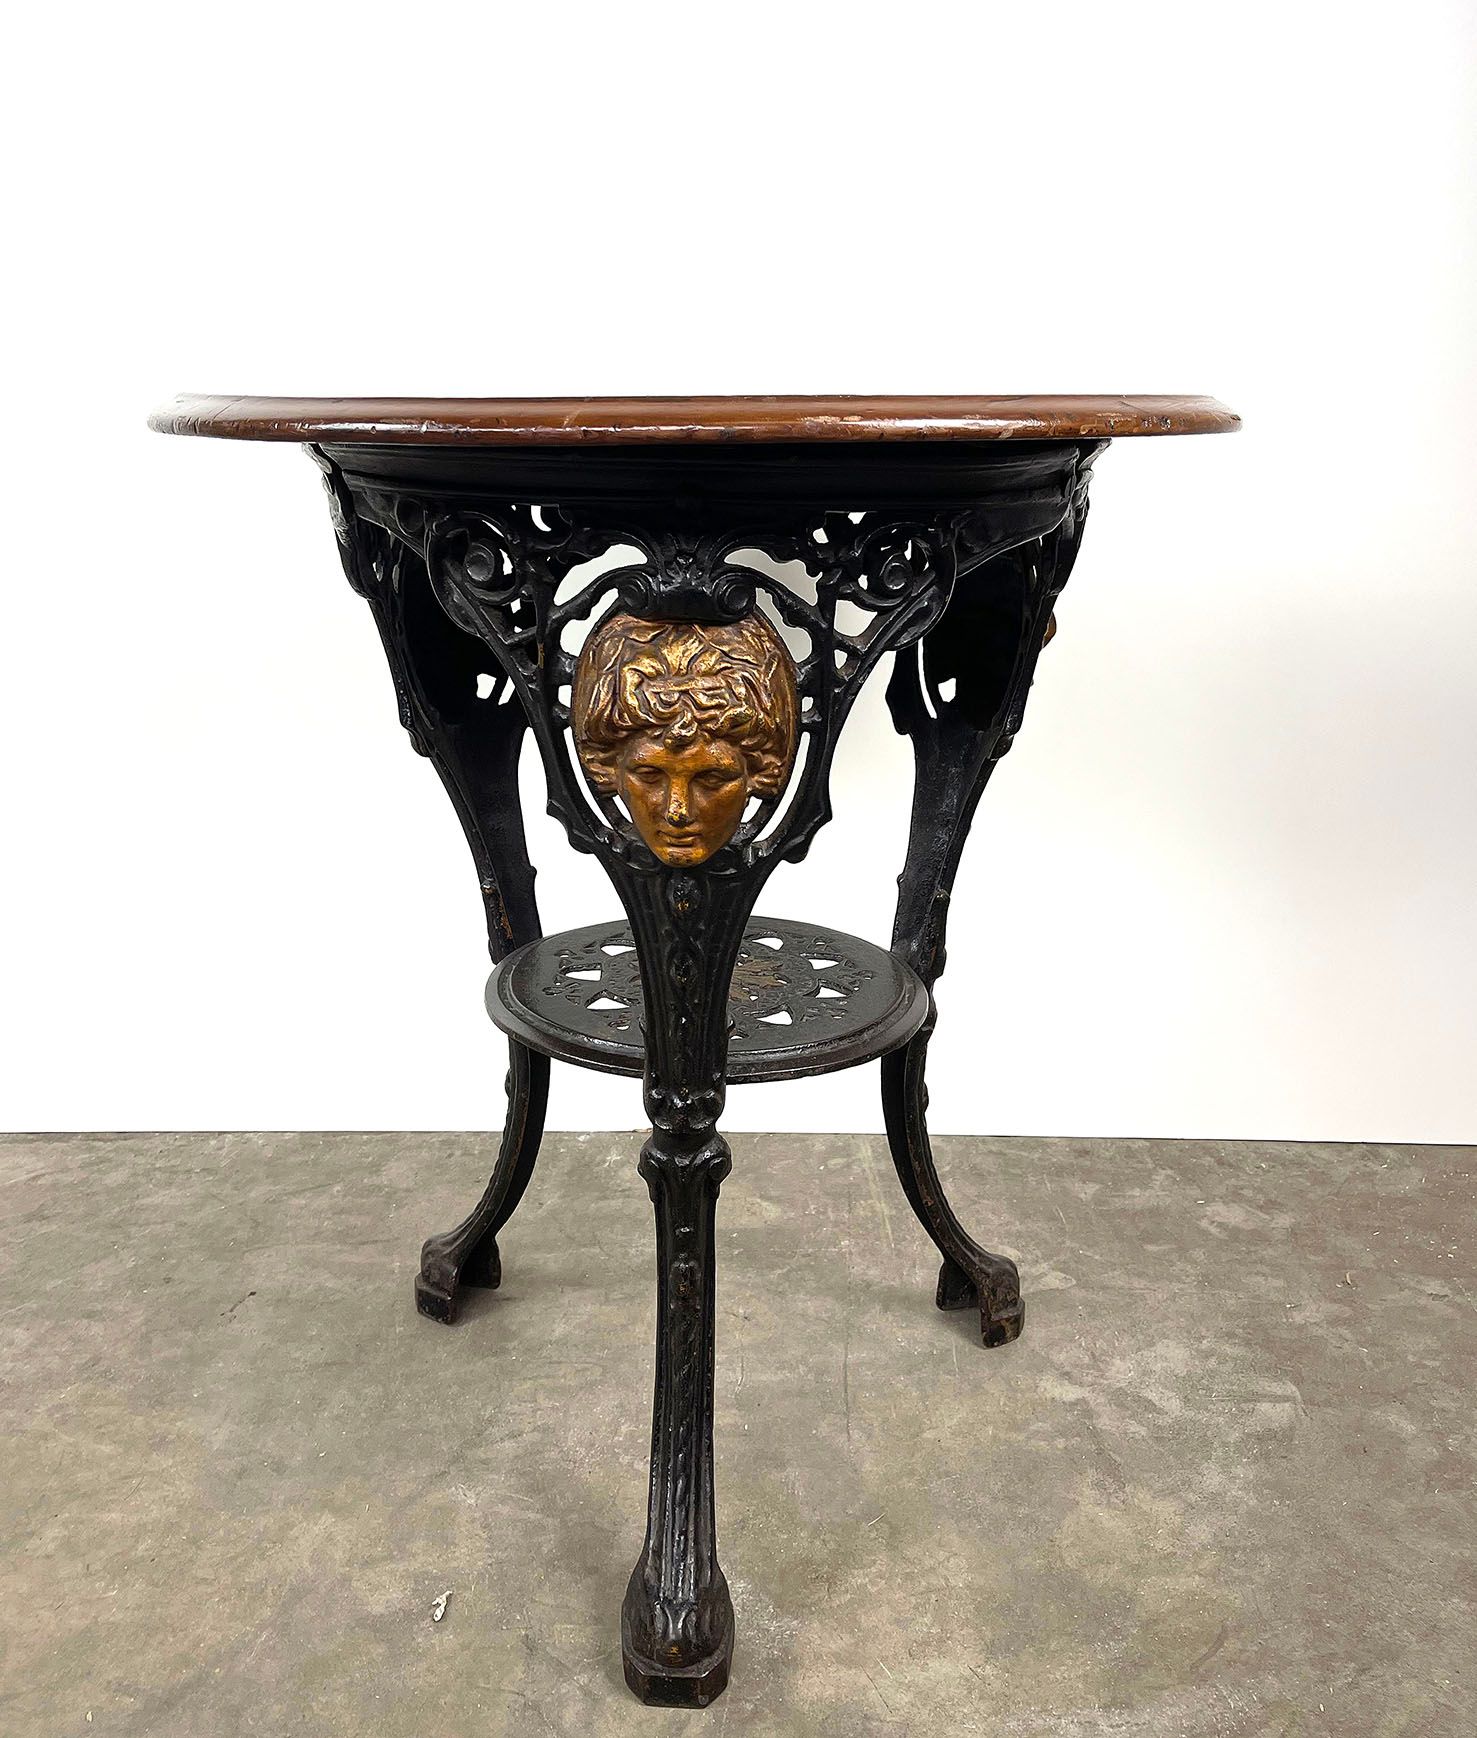 Vintage Round 3 Legged English Pub Table 复古的圆形三腿英式酒吧桌，木制桌面和铸铁底座。木质桌面和黑色和青铜色的铸铁底座&hellip;